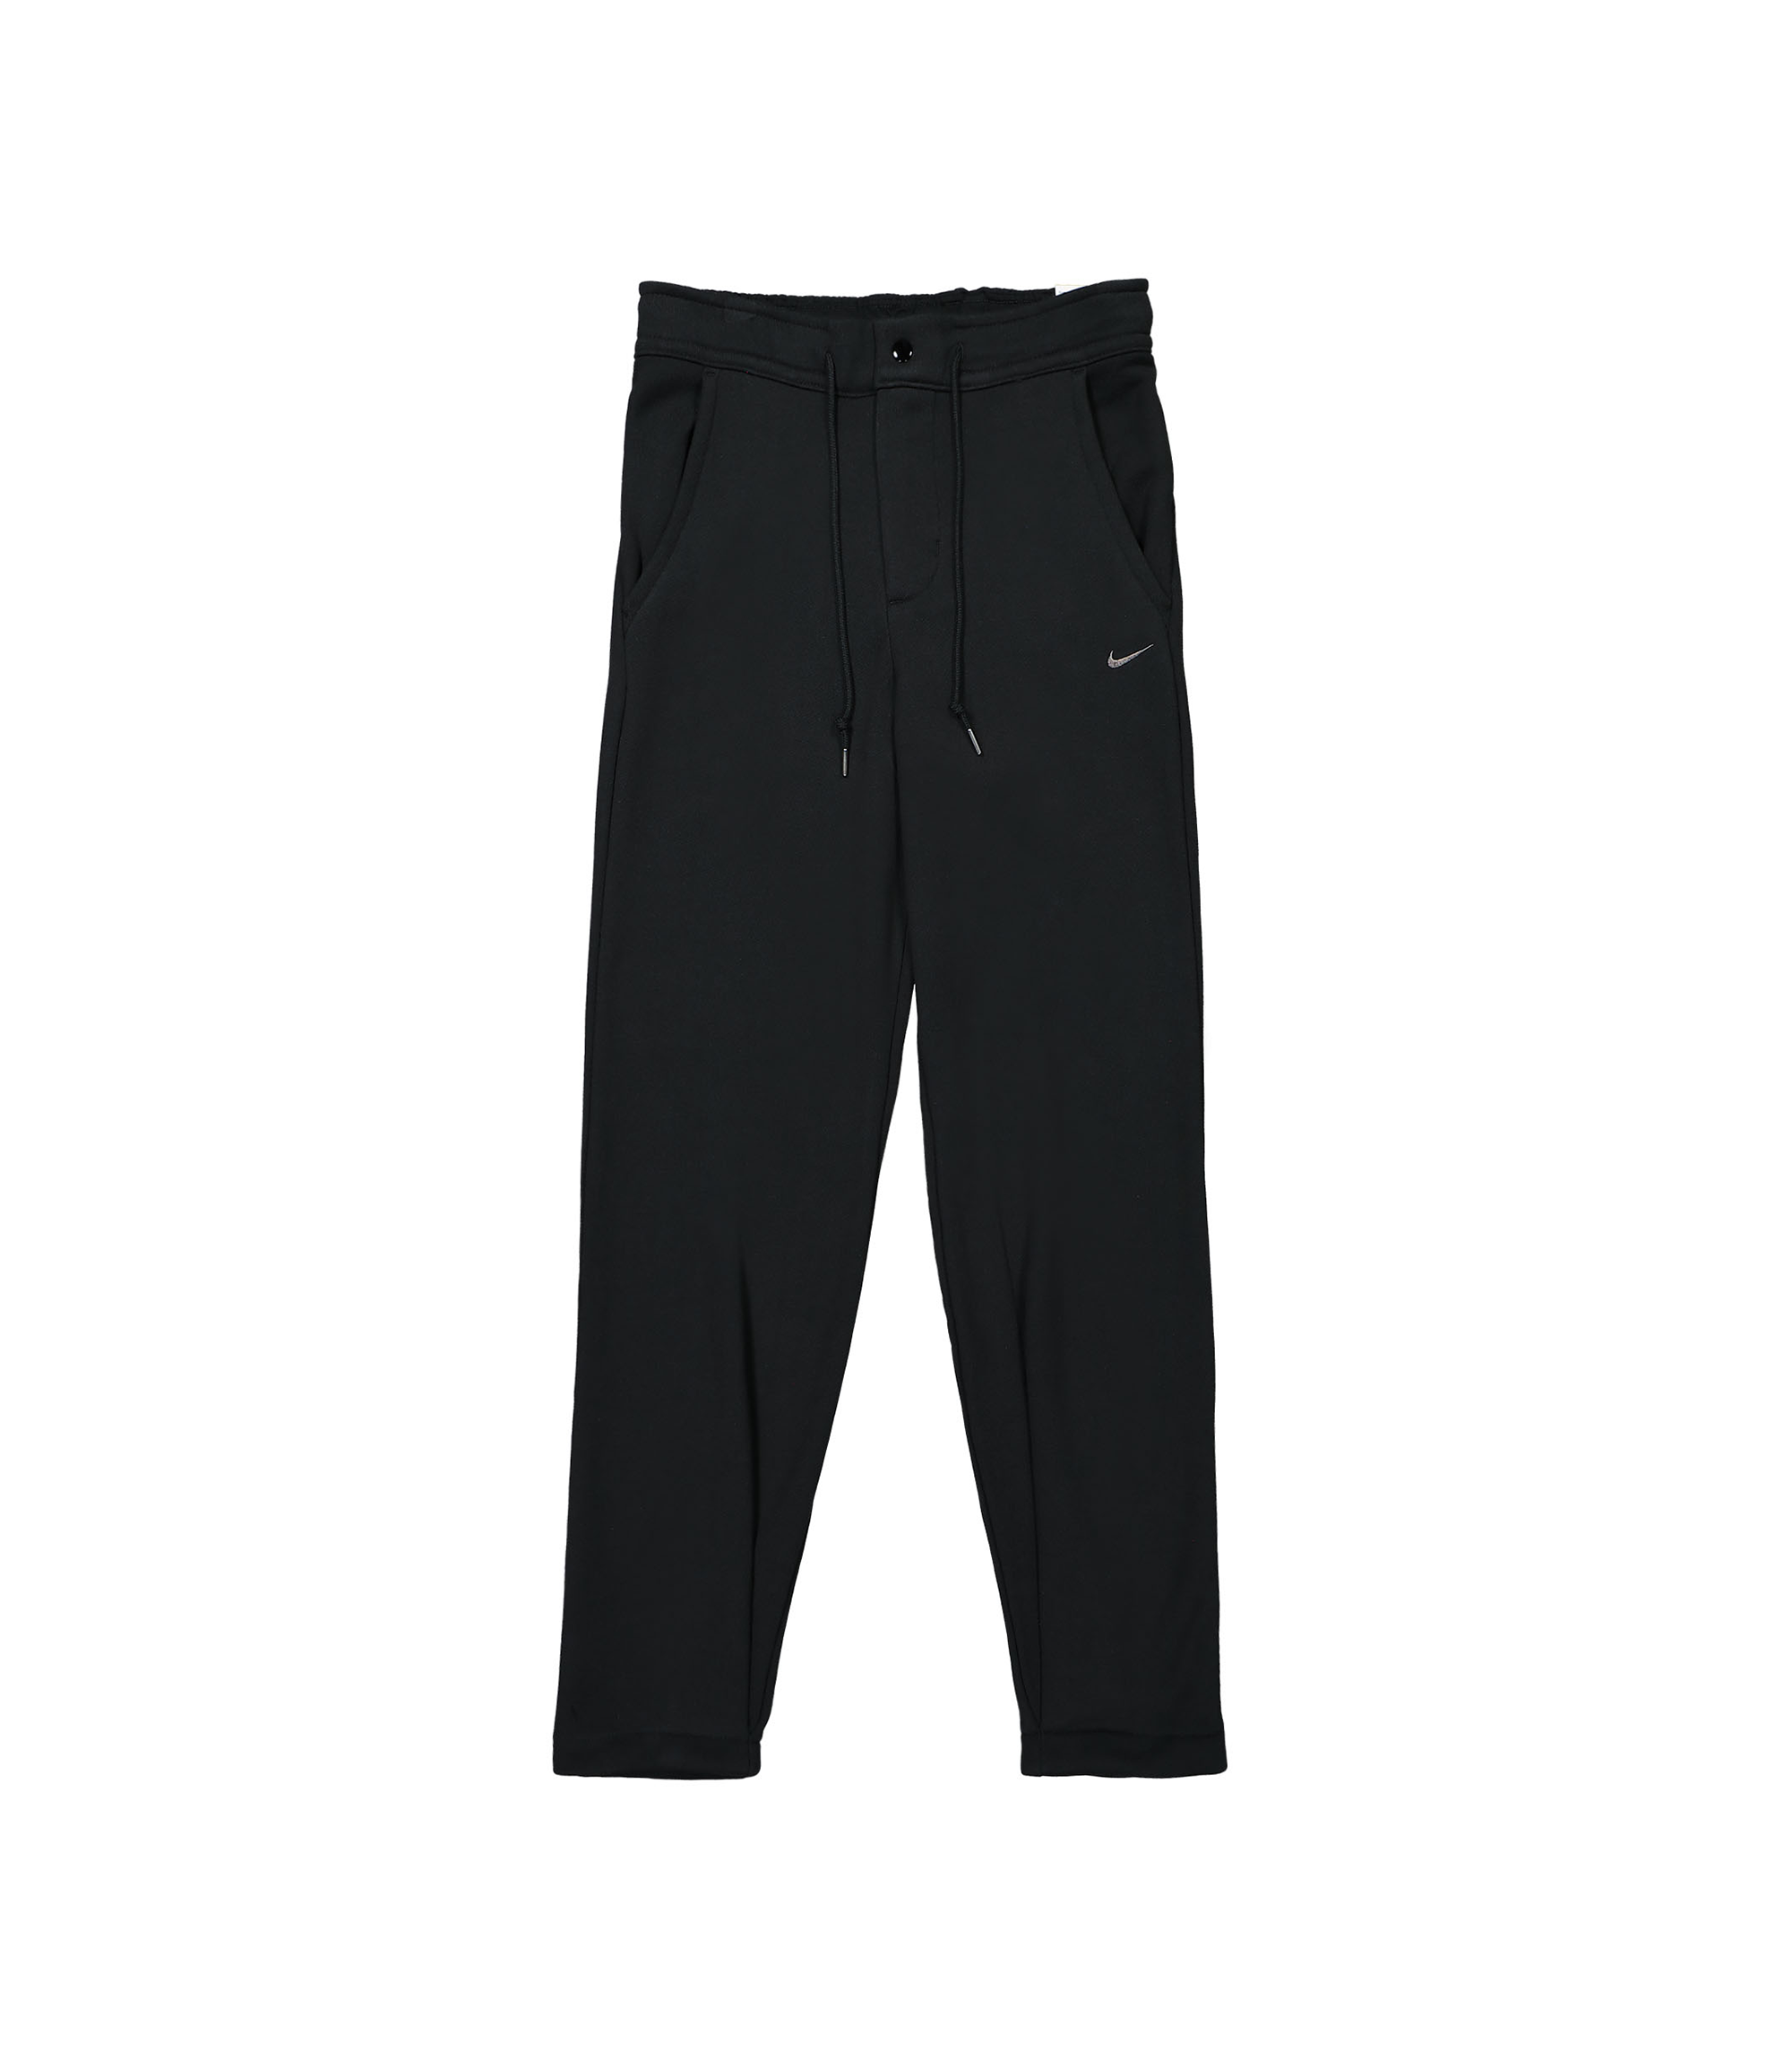 Womens High-Waisted Sweatpants - Black / Flat Pewter